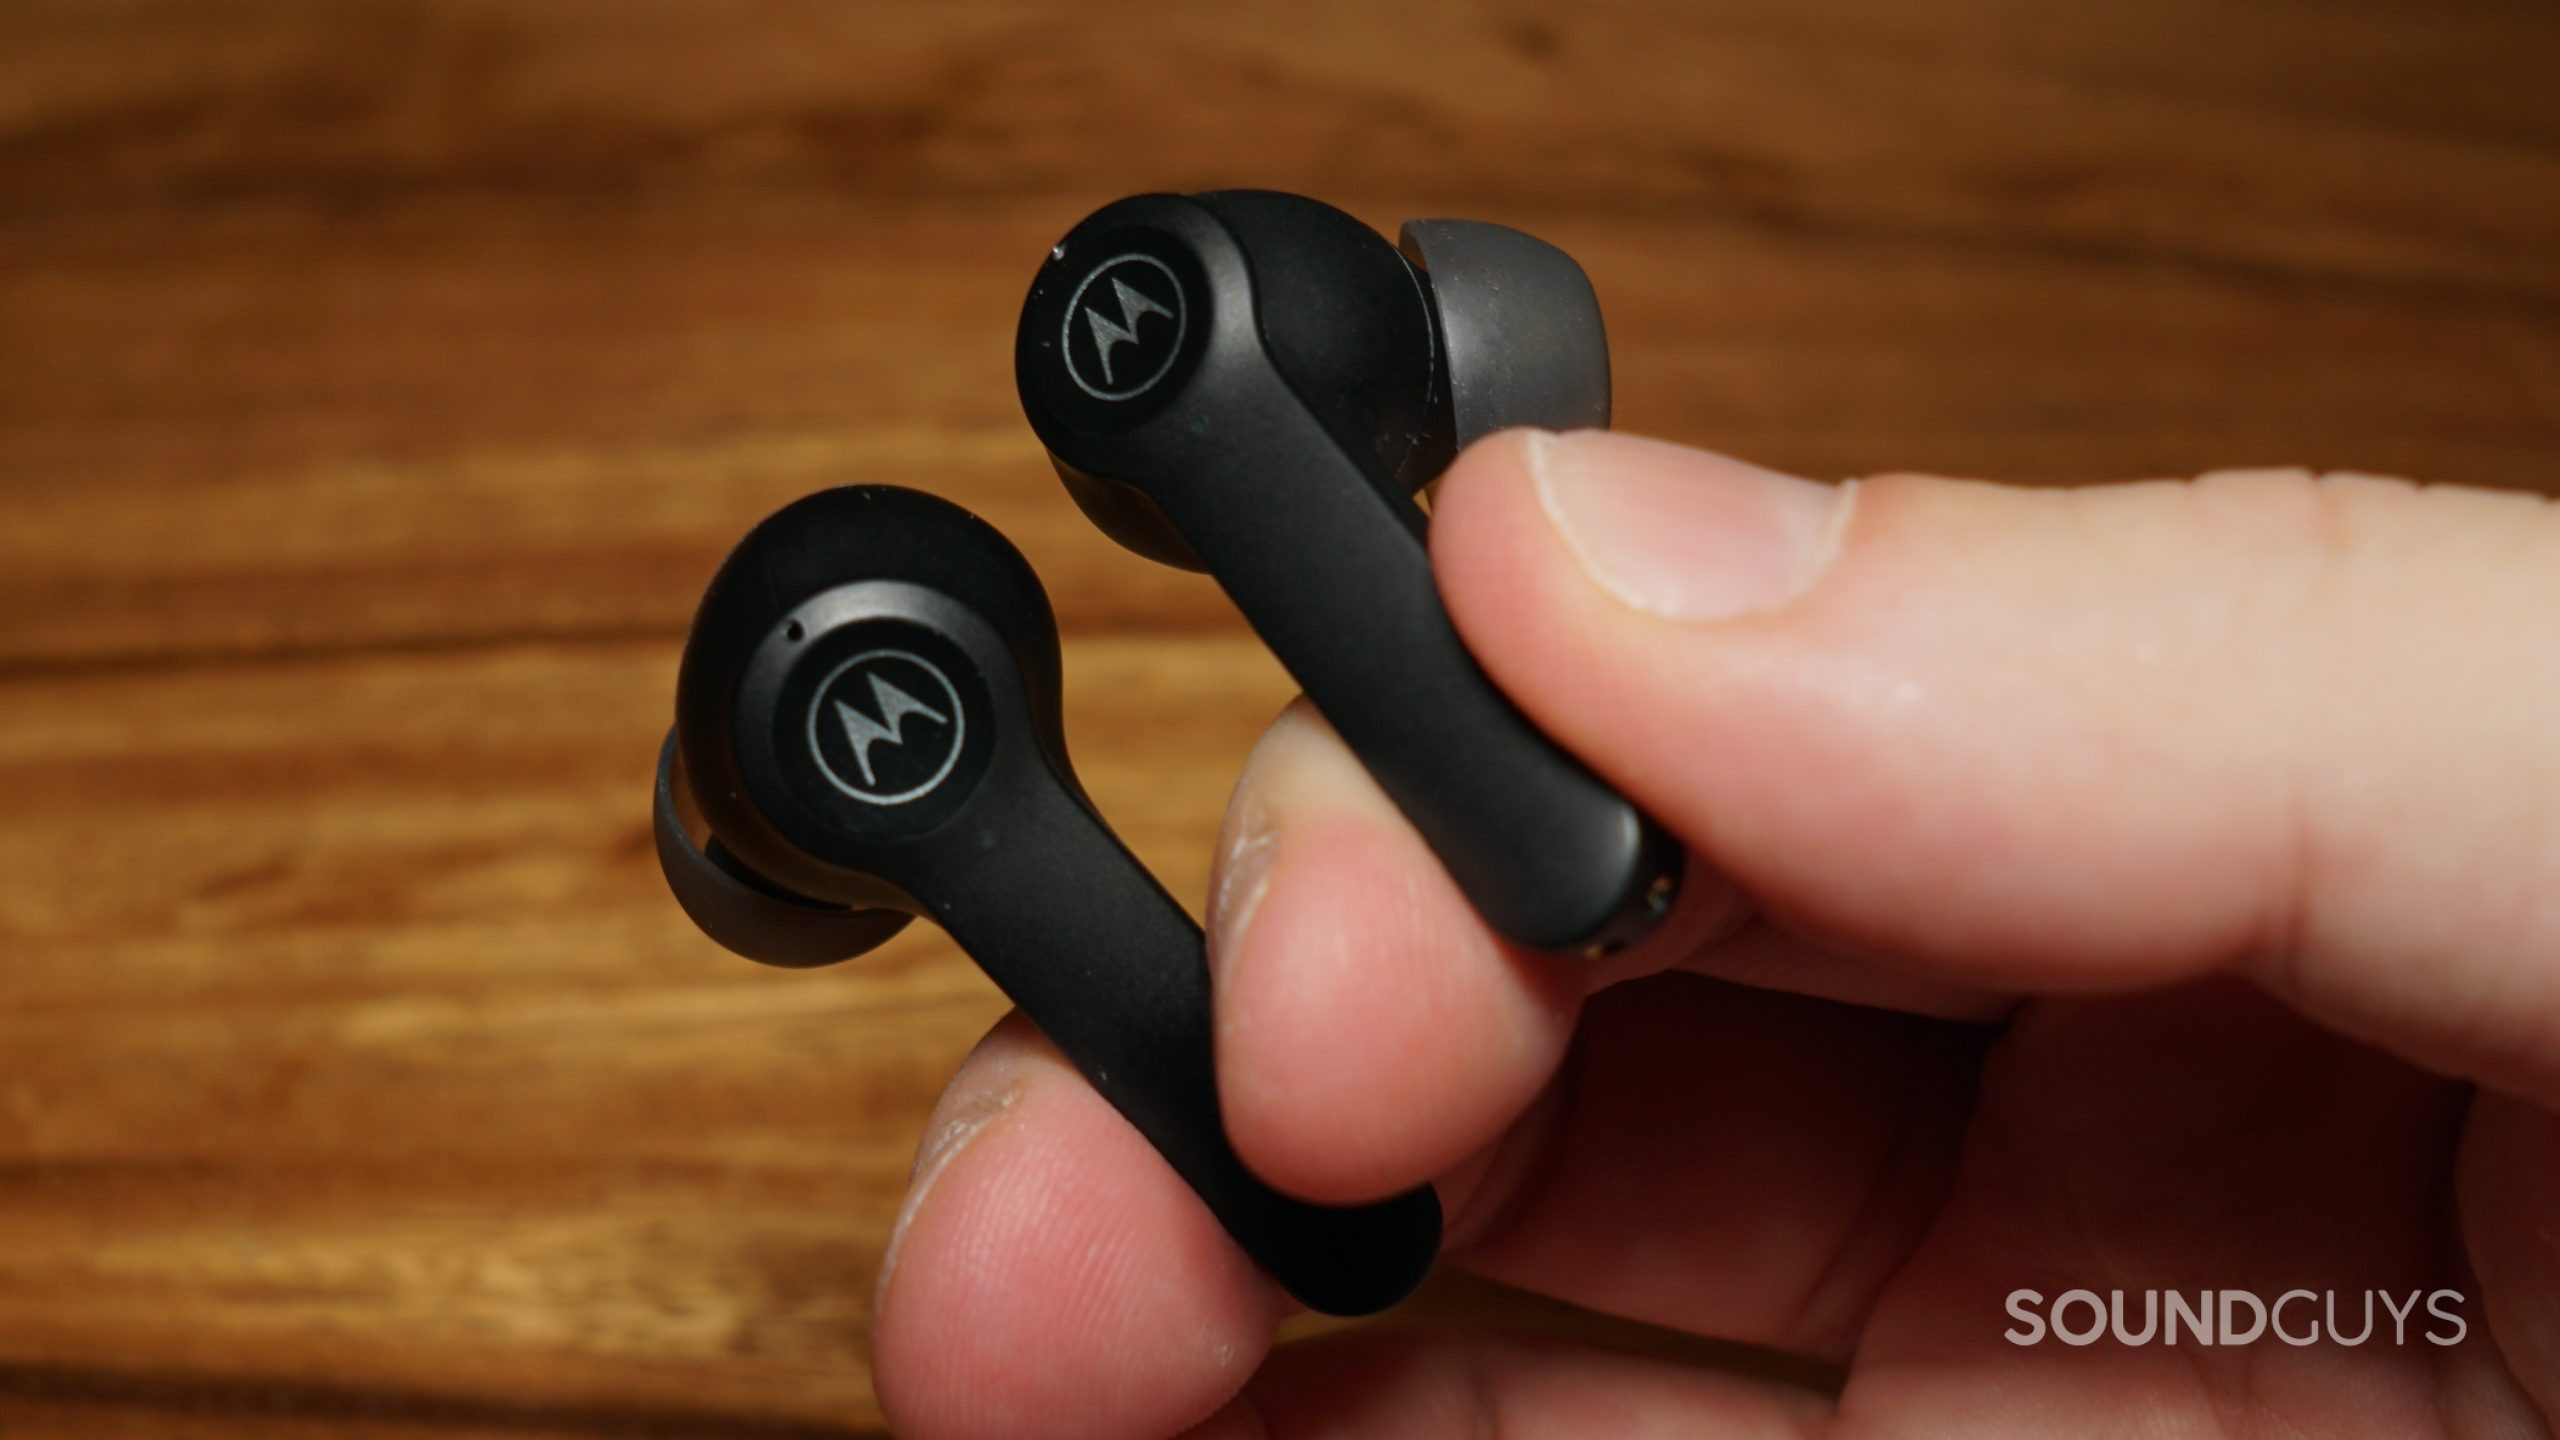 Moto Buds-S ANC true wireless earbuds - Motorola